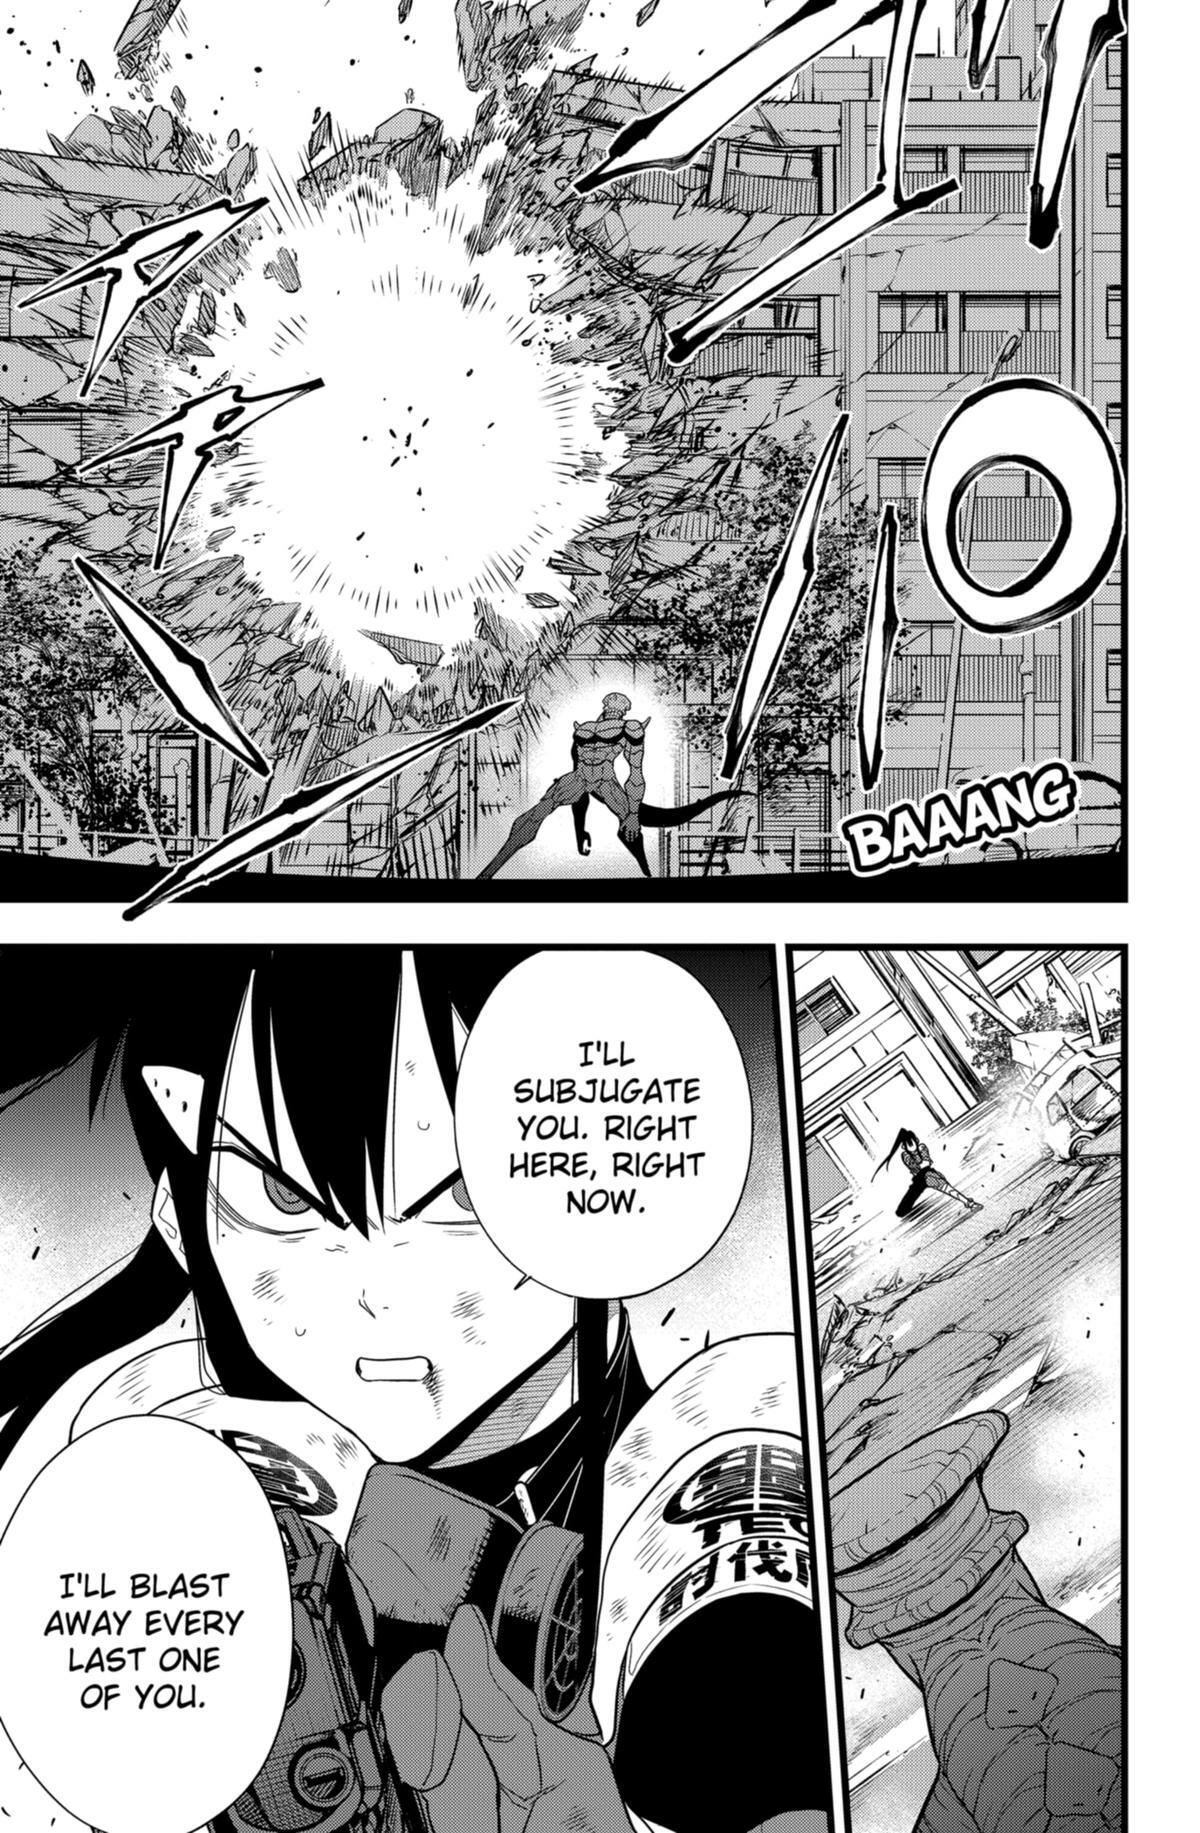 Kaiju No. 8 Chapter 98 page 11 - Mangakakalot